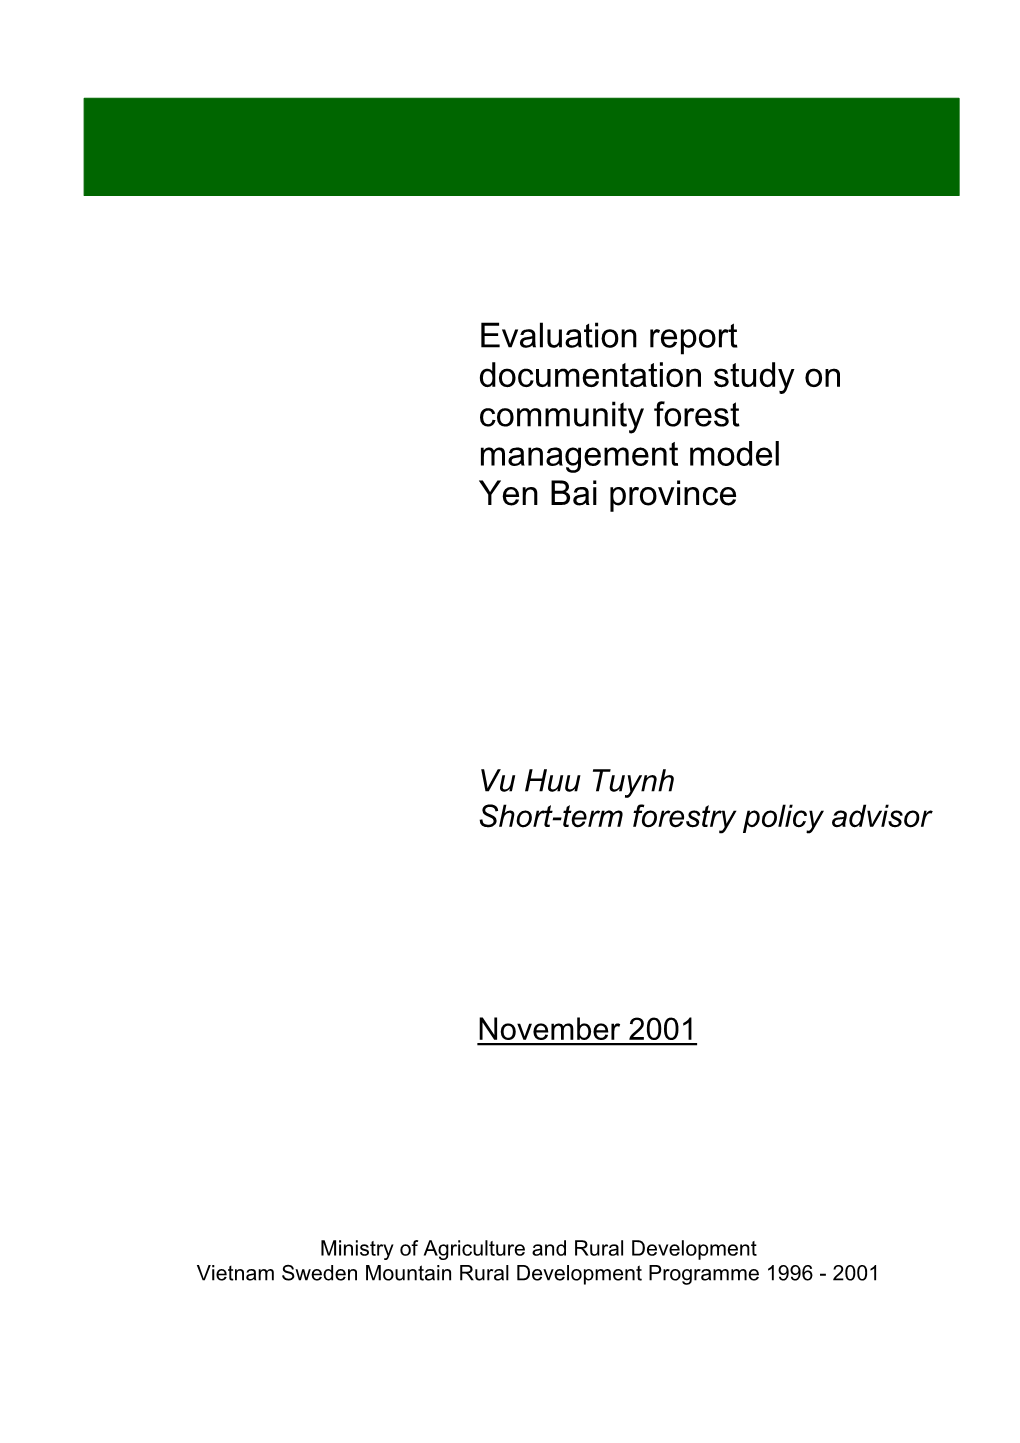 Evaluation Report Documentation Study on Community Forest Management